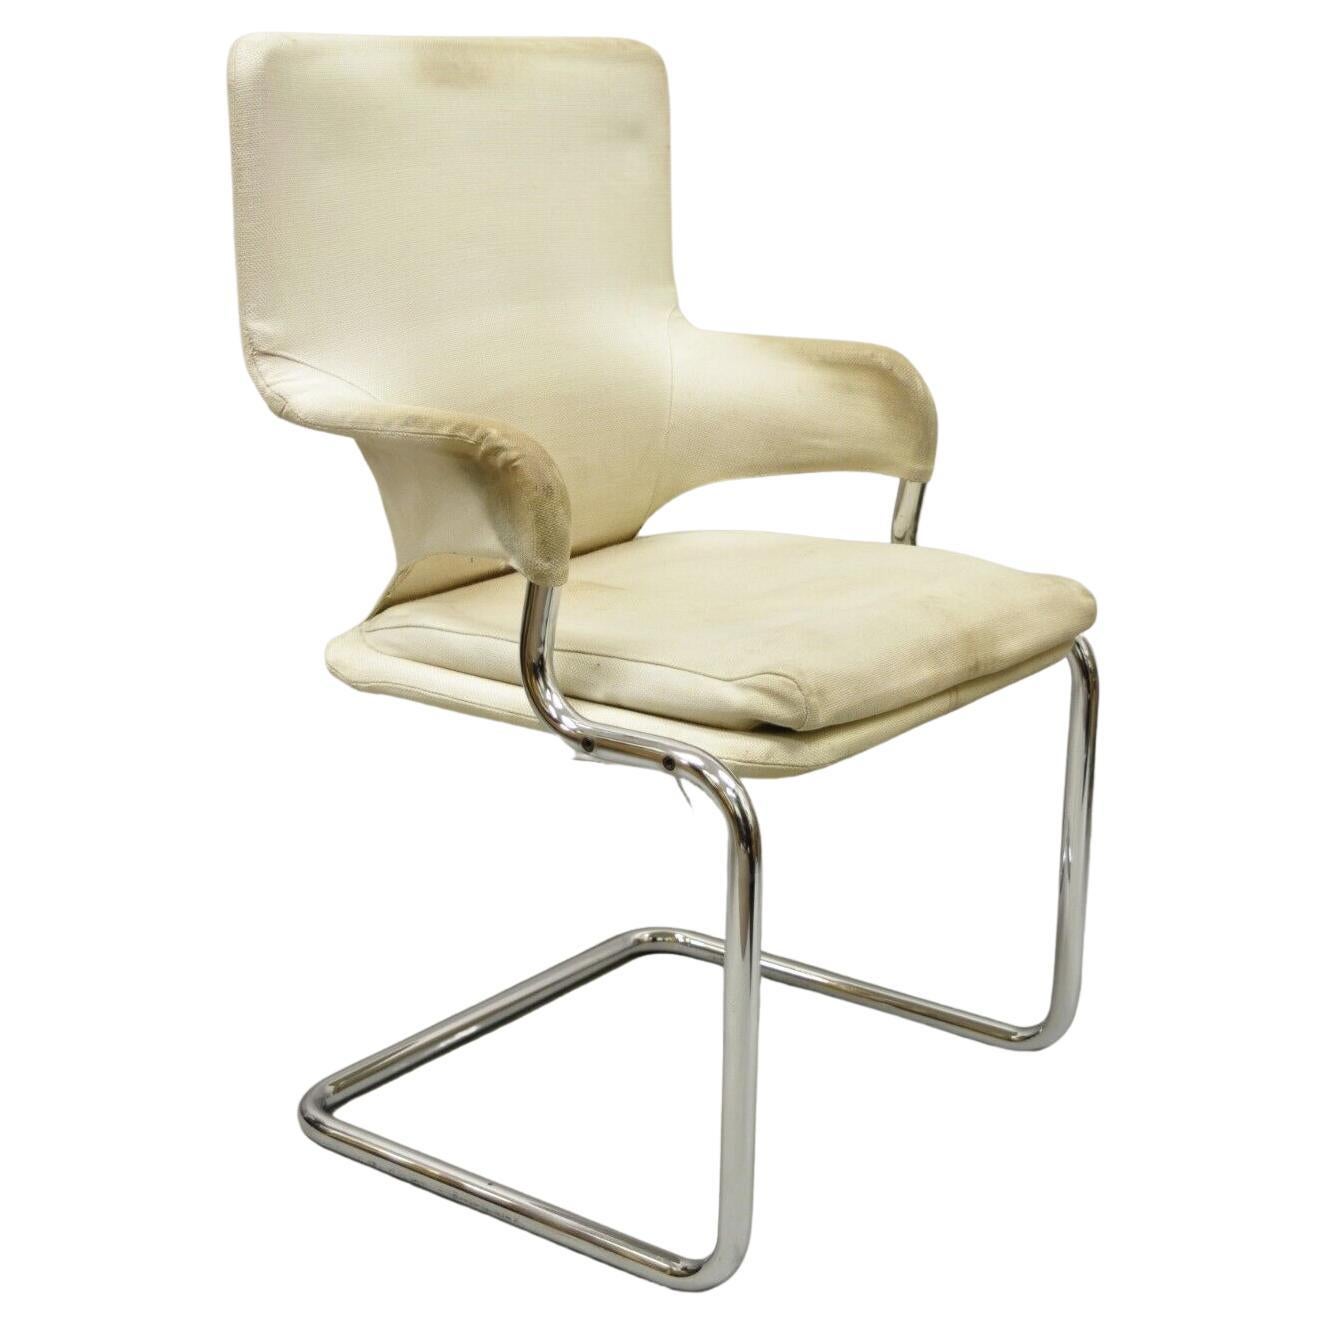 Vintage Mid-Century Modern Tubular Chrome Arm Chair with Burlap Seat For Sale